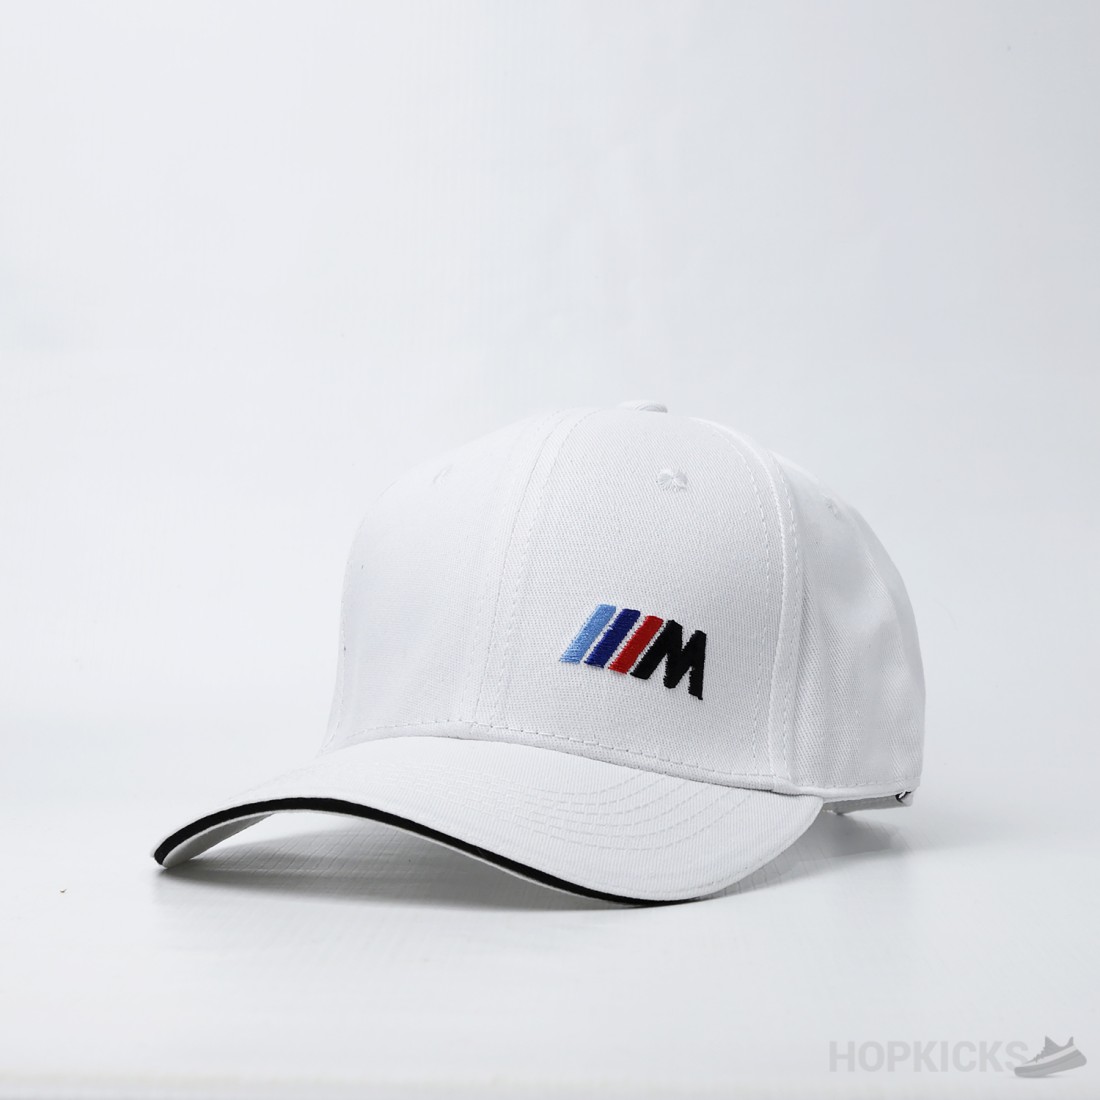 Bmw M Power Team Hat Outdoor Sports Baseball Cap Racing Cap Adjustable  Cotton Peaked Cap-White